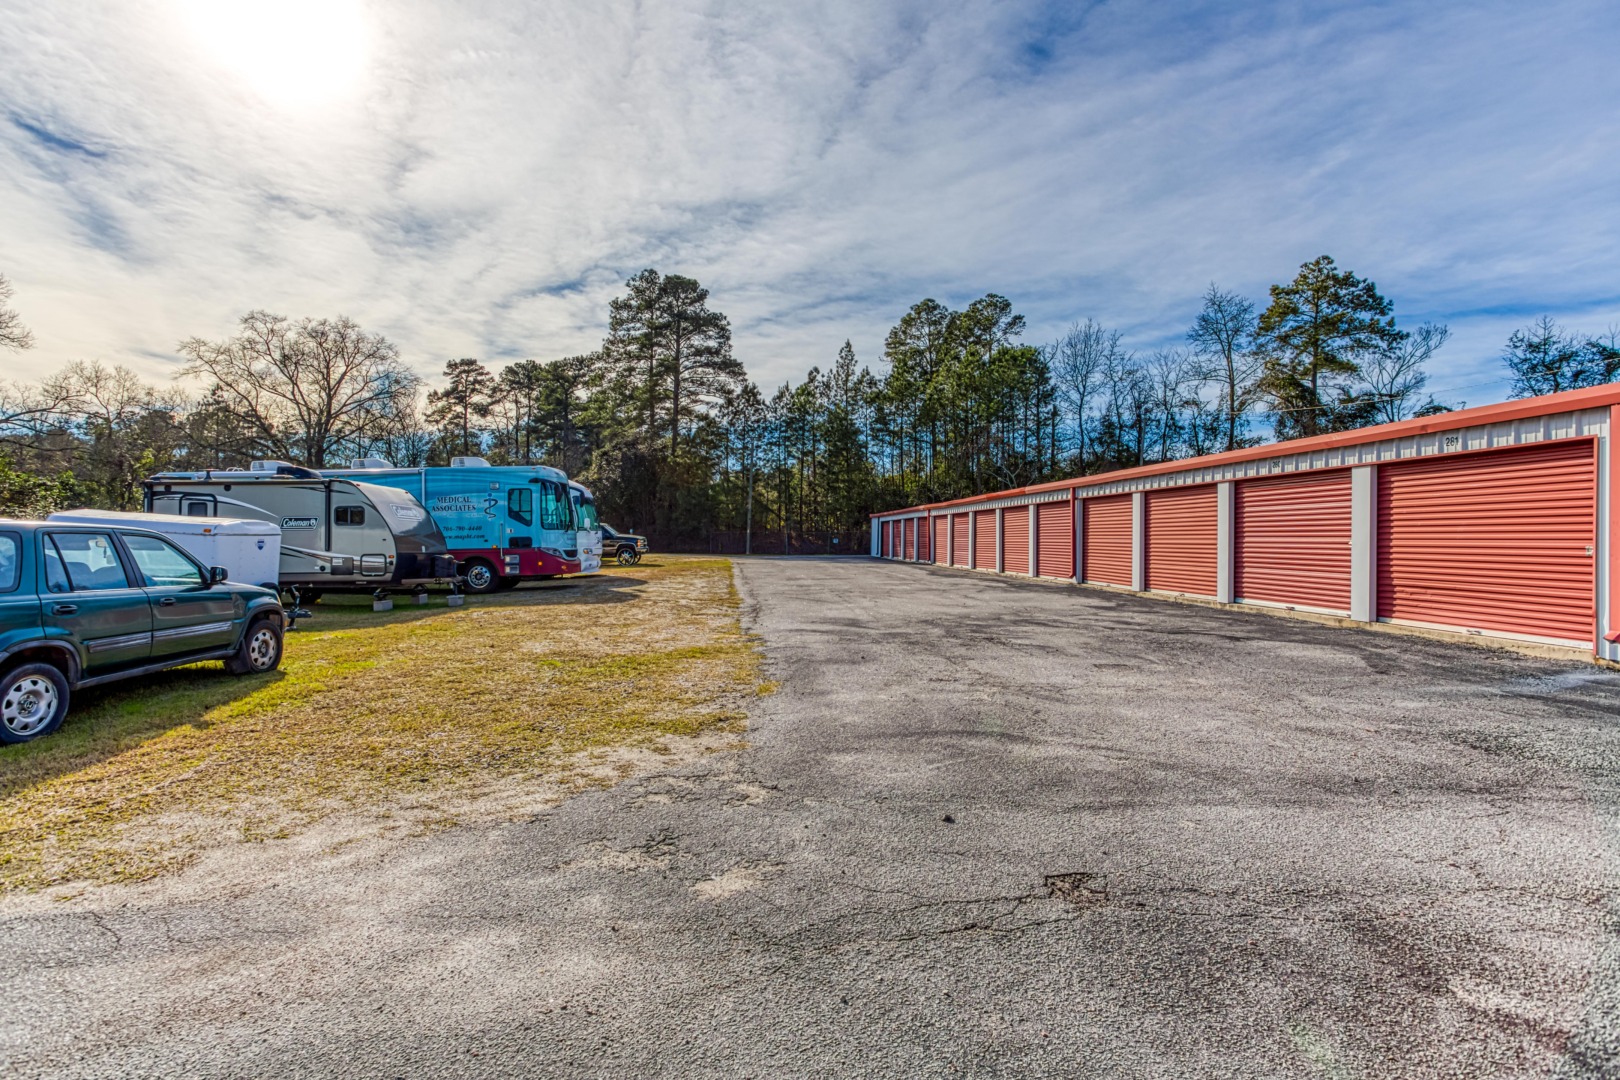 Vehicle storage and self storage units in Augusta, GA.